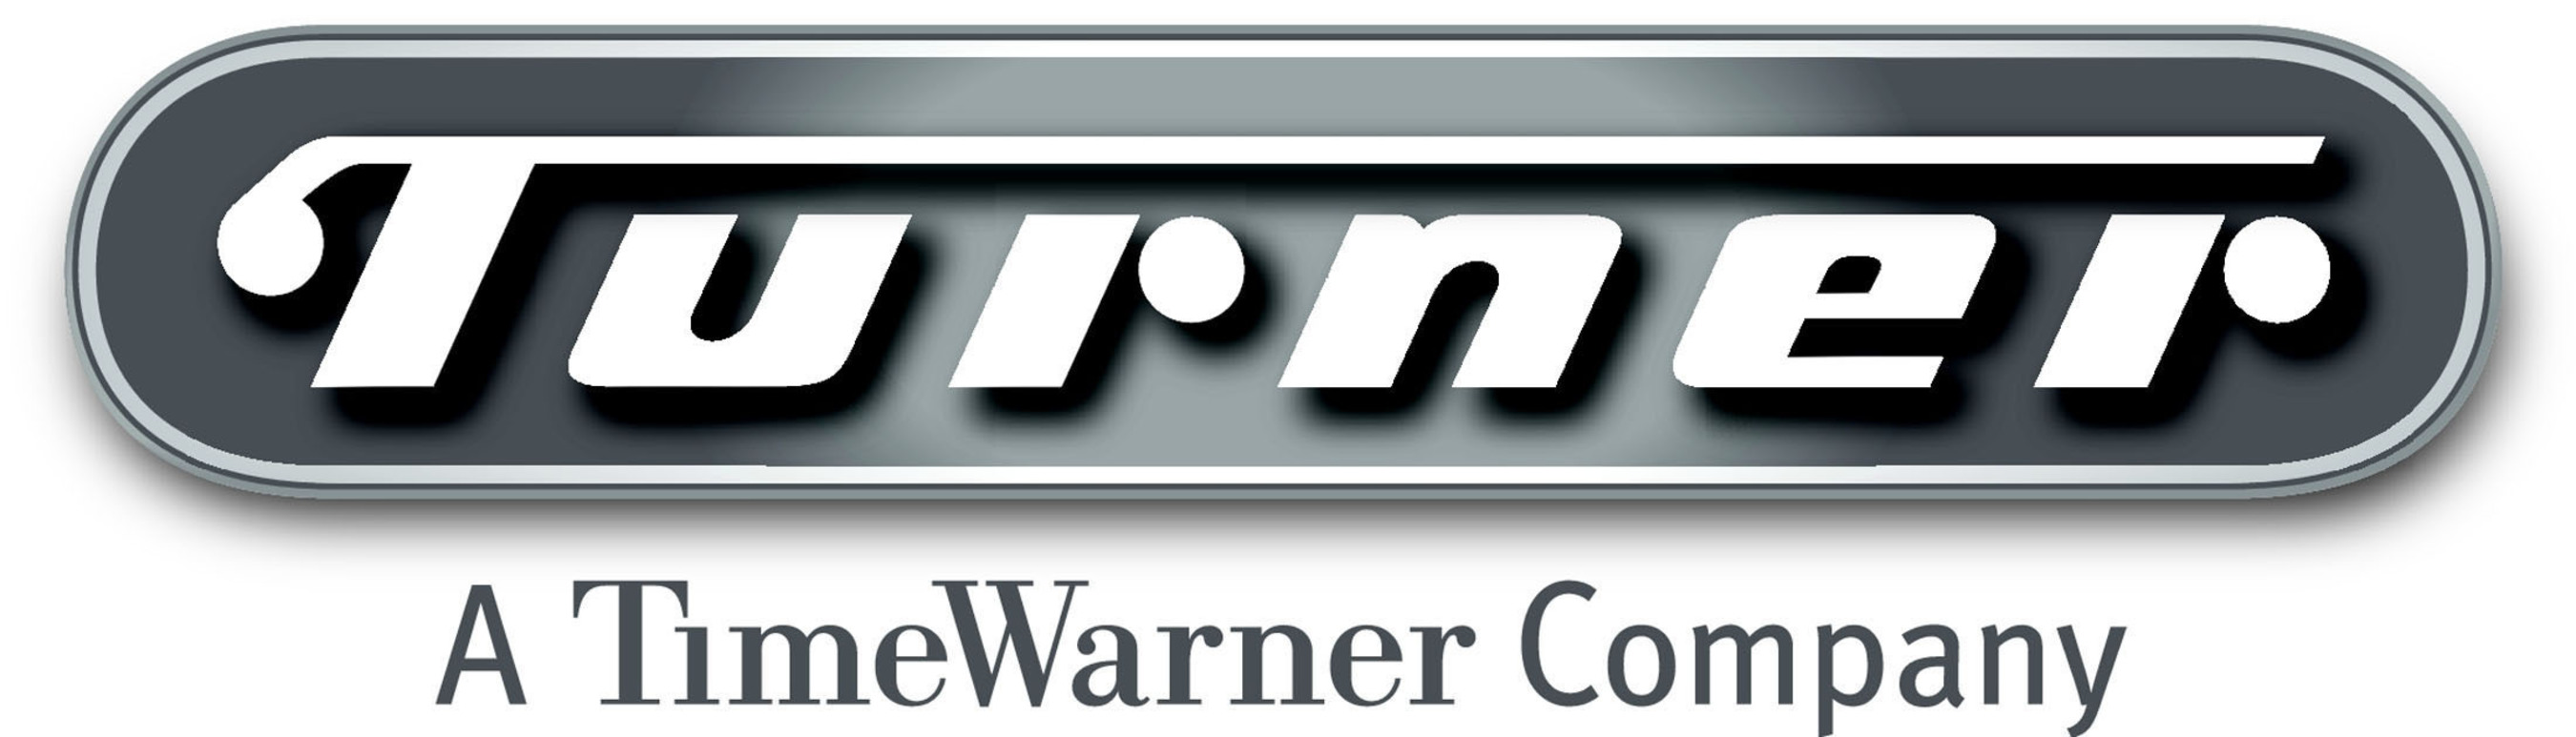 Turner Broadcasting System, Inc. logo. (PRNewsFoto/Netflix, Inc.) (PRNewsFoto/NETFLIX, INC.)